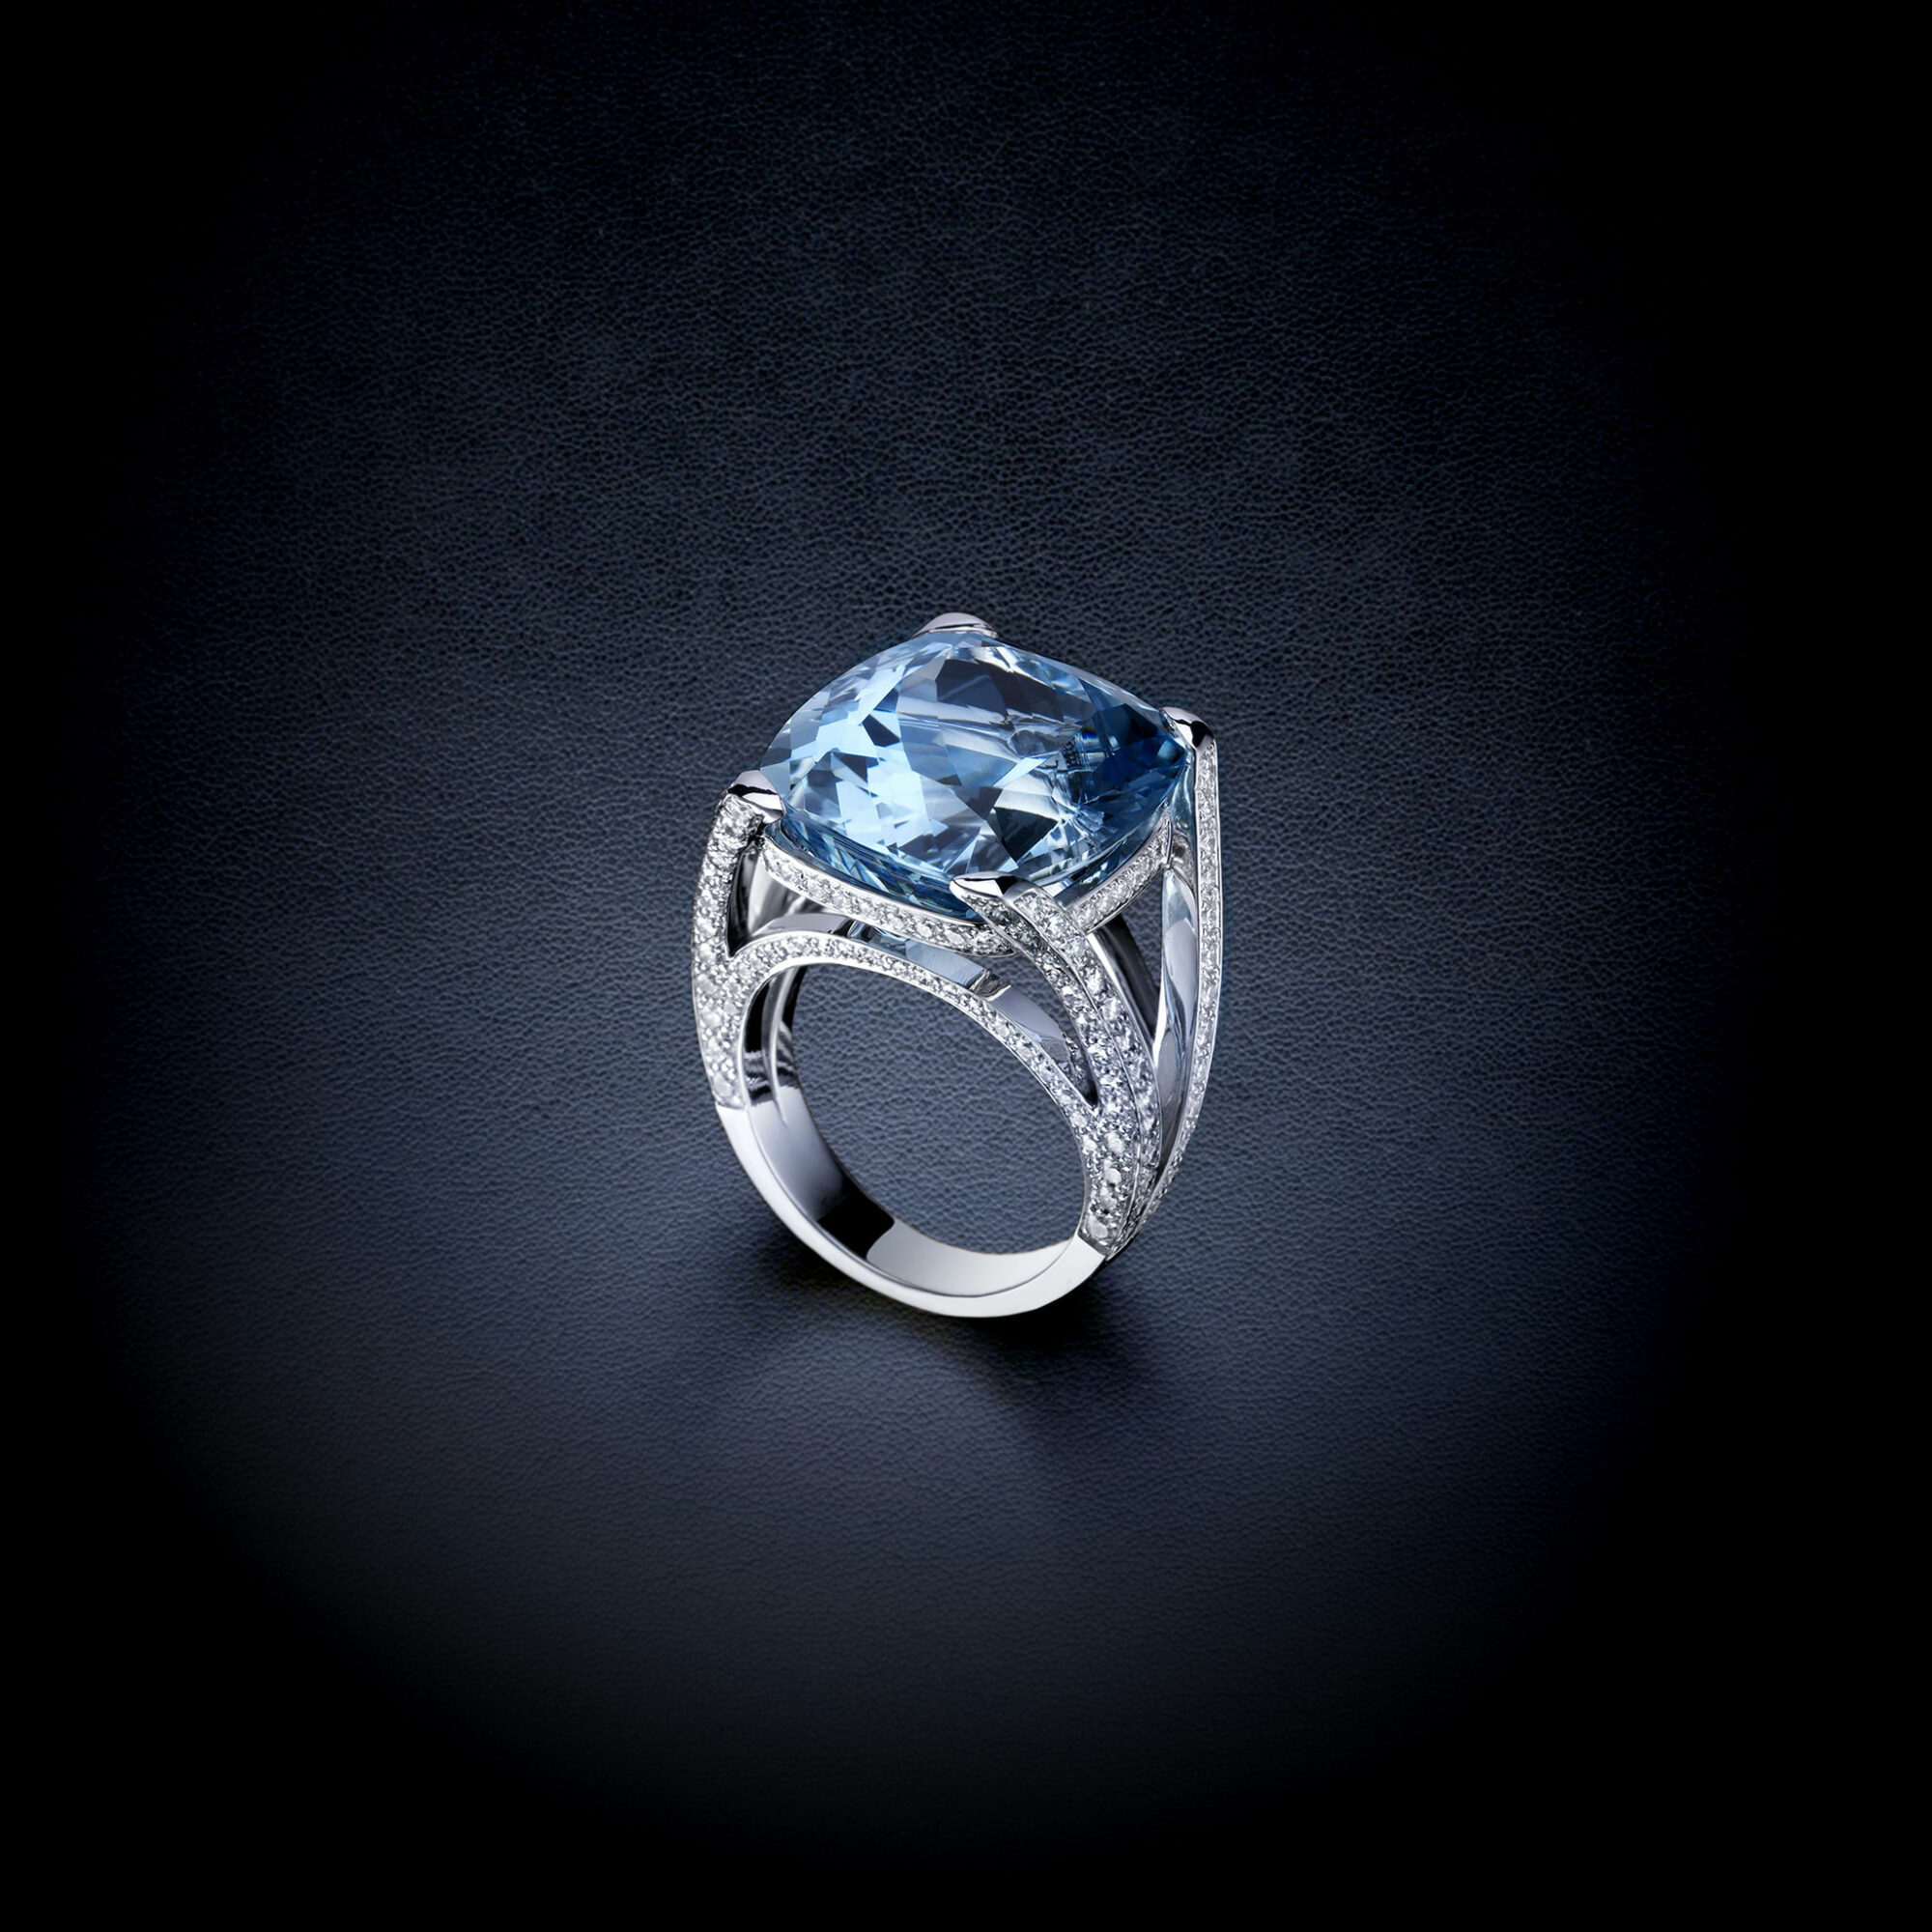 Ring COCKTAIL diamonds and Aqua-Marine